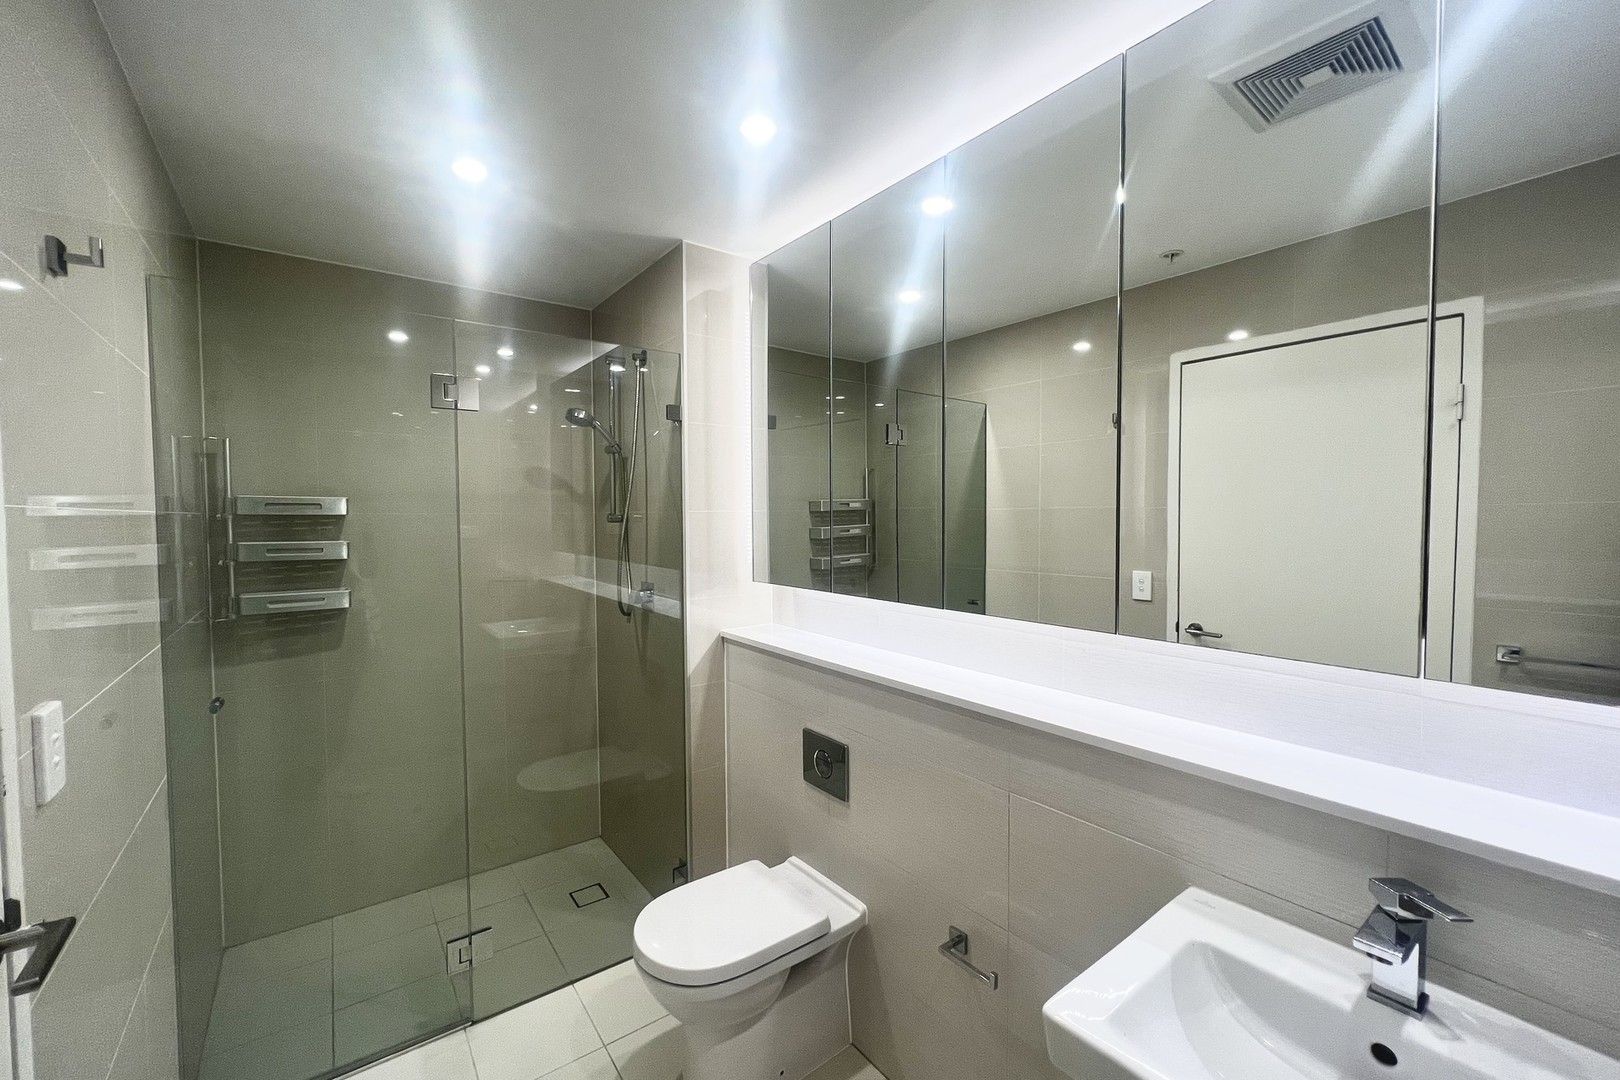 2 bedrooms Apartment / Unit / Flat in 802C/12 Nancarrow Avenue RYDE NSW, 2112